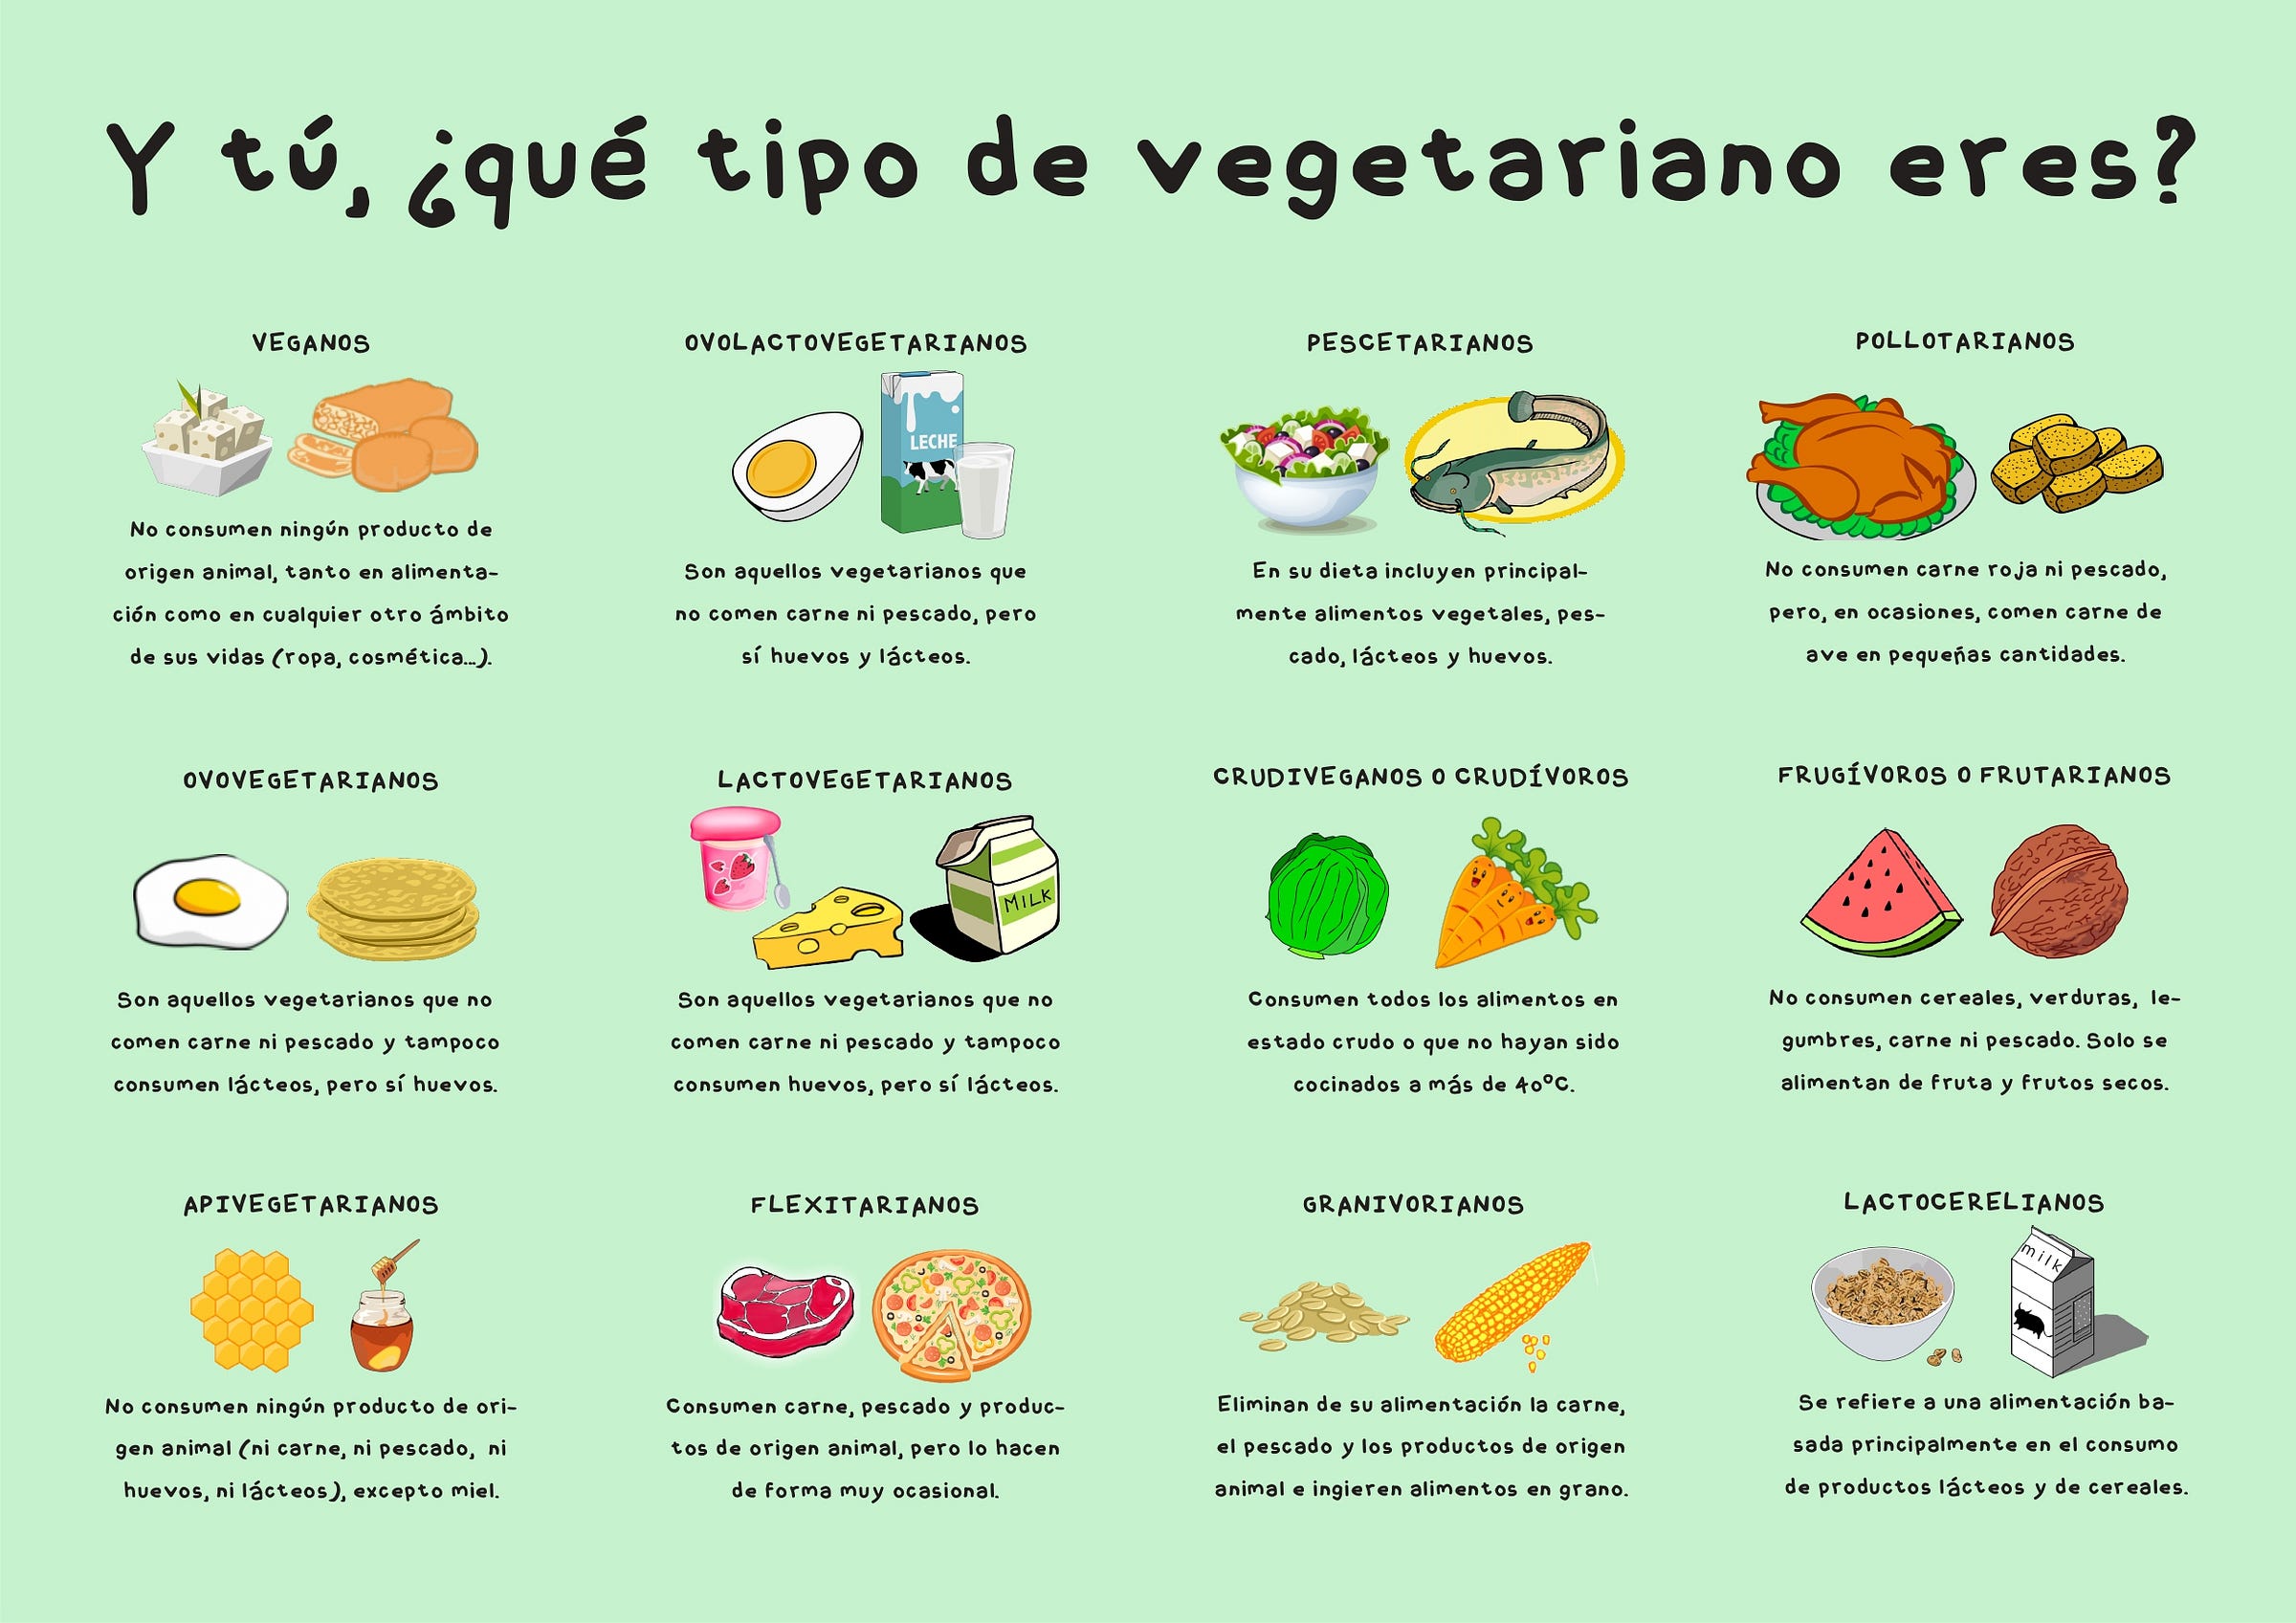 Resultado de imagen para infografia vegetariano